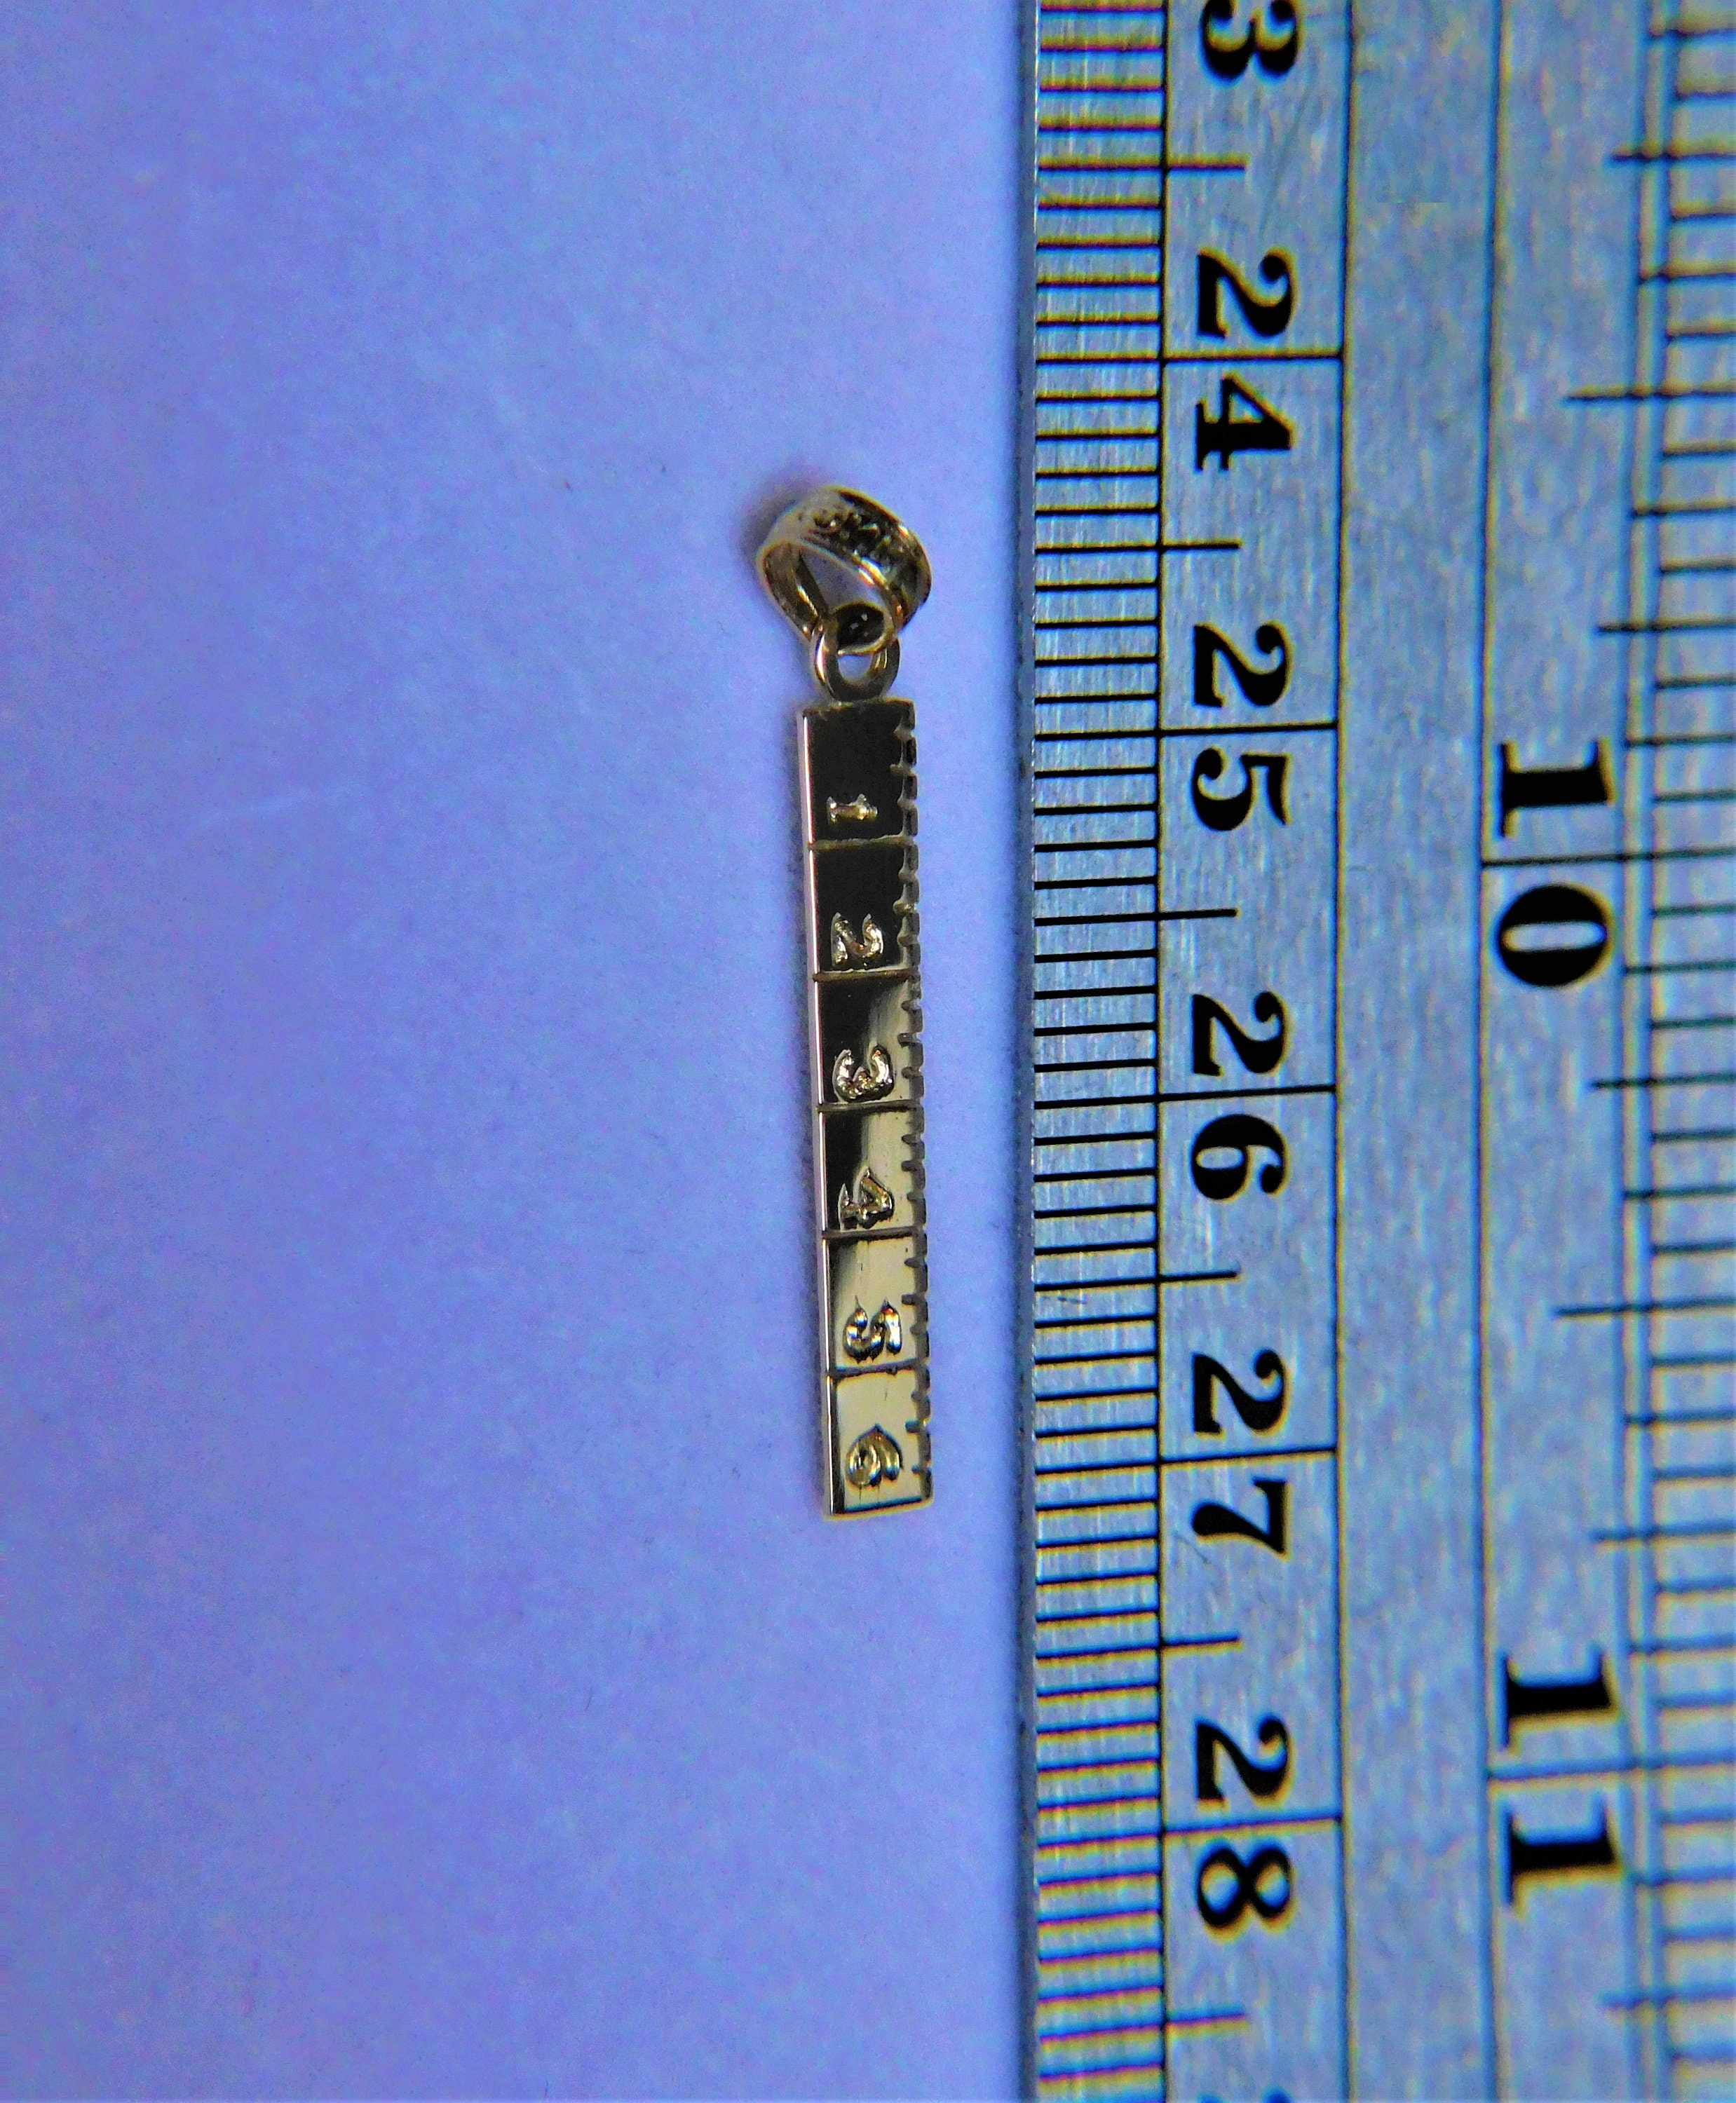 Brass Mini Ruler, Solid Brass Ruler, 2inches Ruler, Brass Tag, Key Chain  Ruler, EDC Ruler, Bronze Ruler, Copper Ruler 